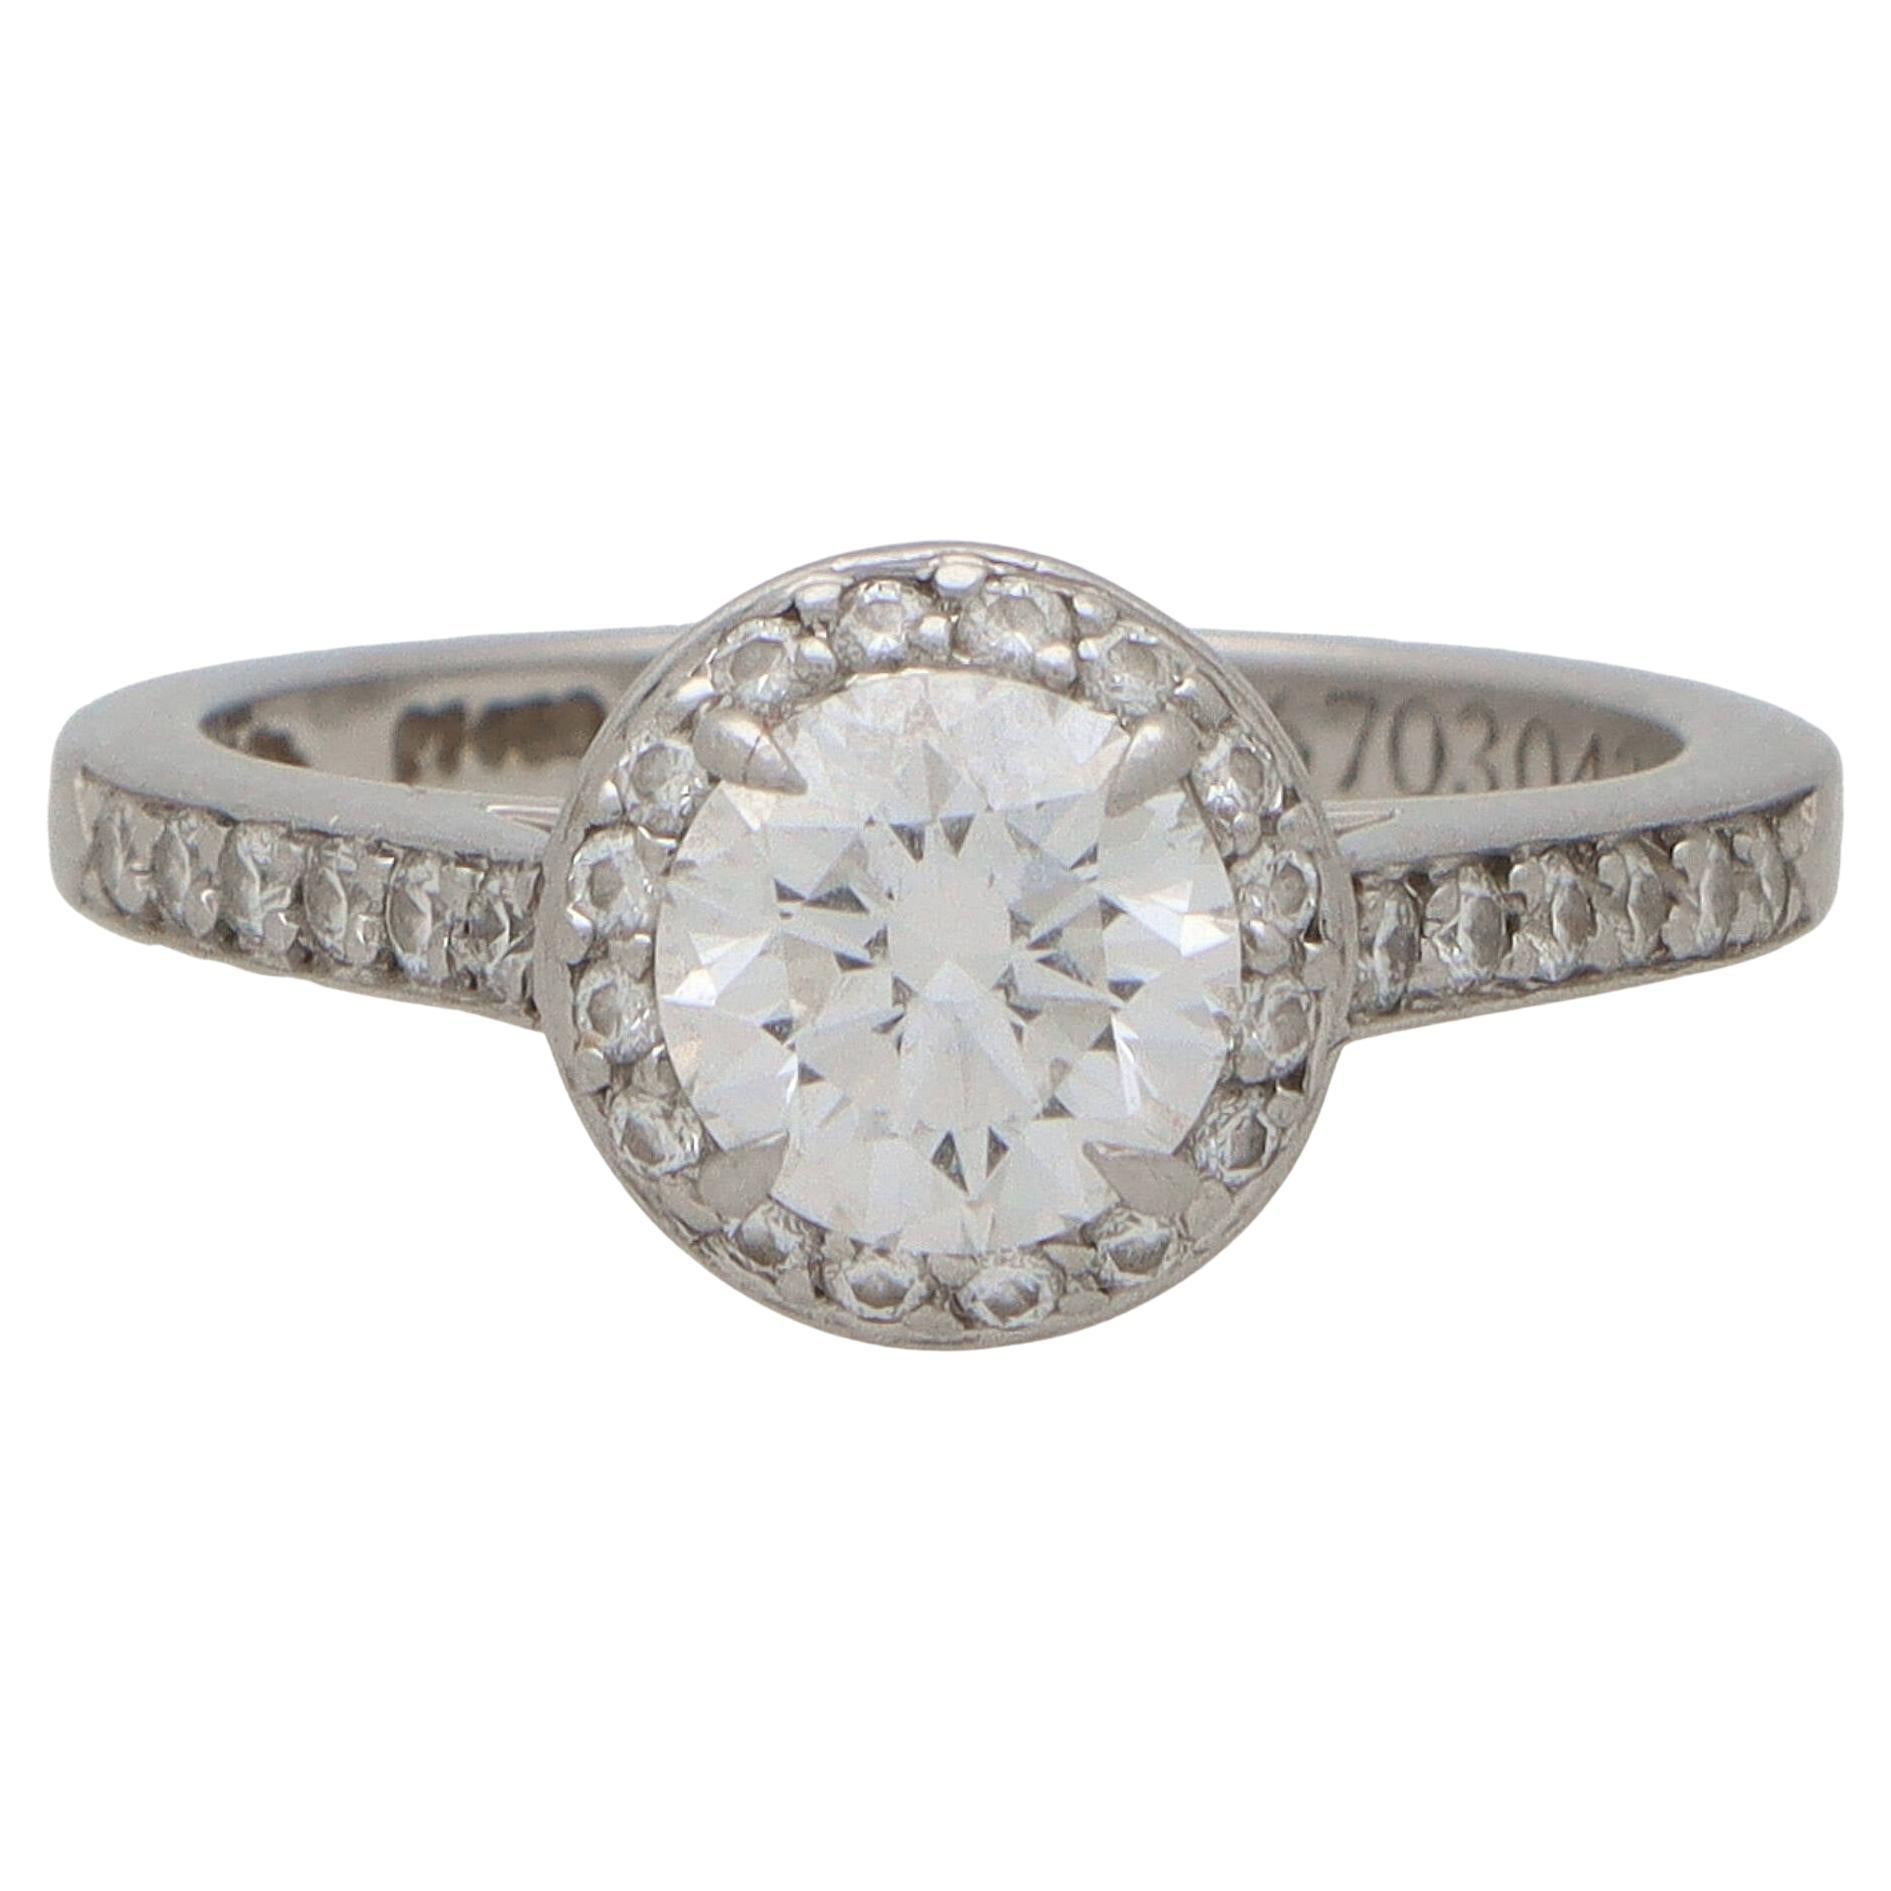 Vintage Tiffany & Co. Soleste D-Color Diamond Halo Ring in Platinum 